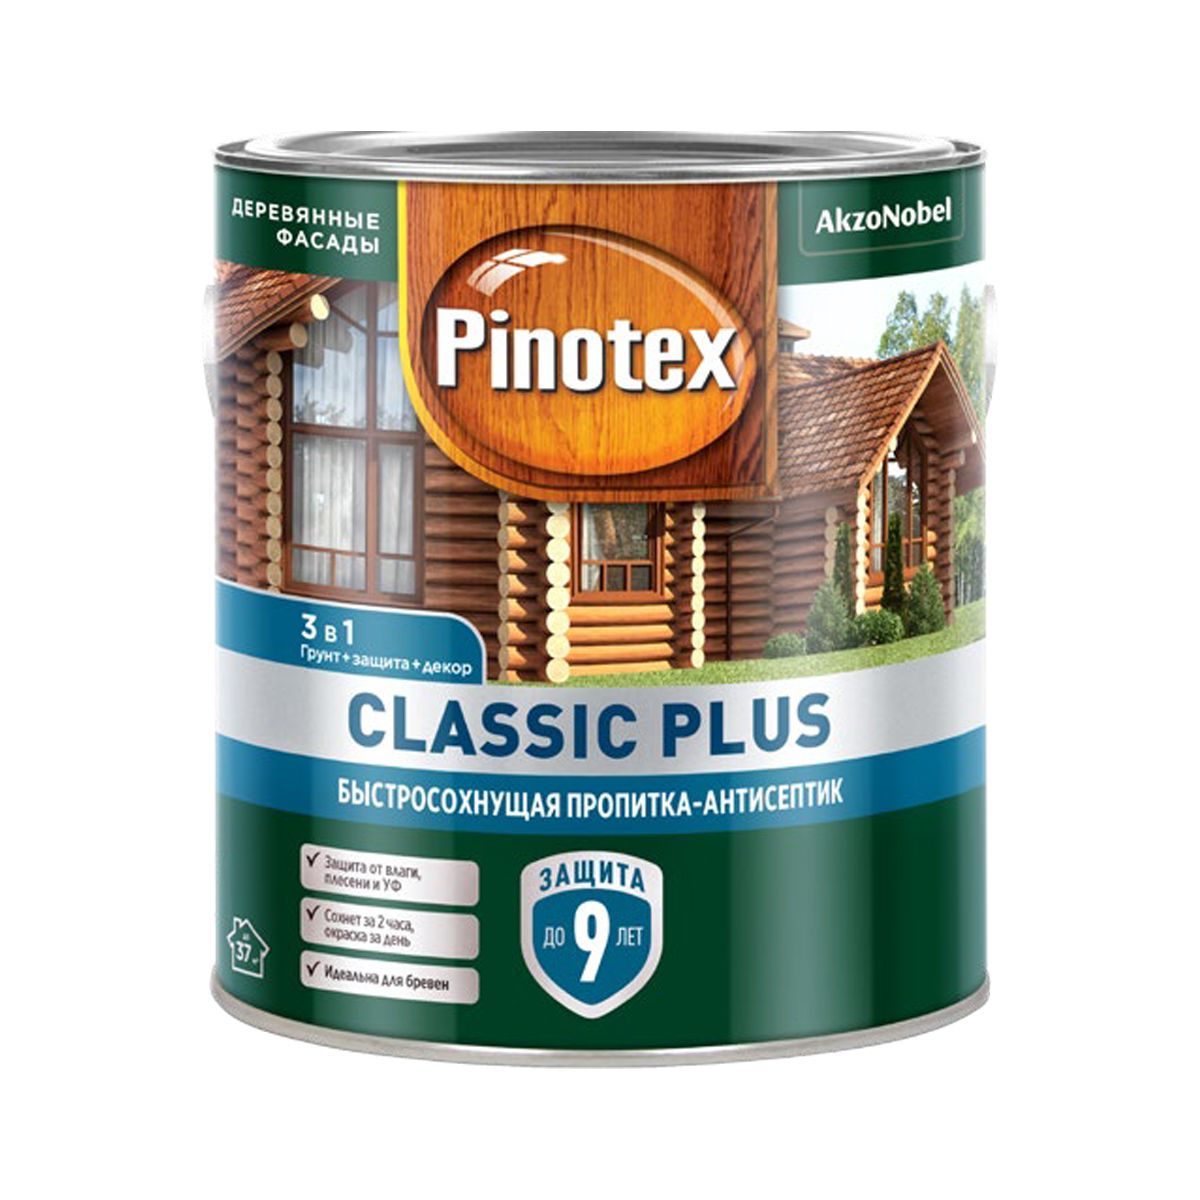 Пропитка-антисептик Pinotex Classic Plus 3 в 1,быстросохнущая, сосна, 900 мл пропитка антисептик pinotex classic plus 3 в 1 быстросохнущая сосна 900 мл